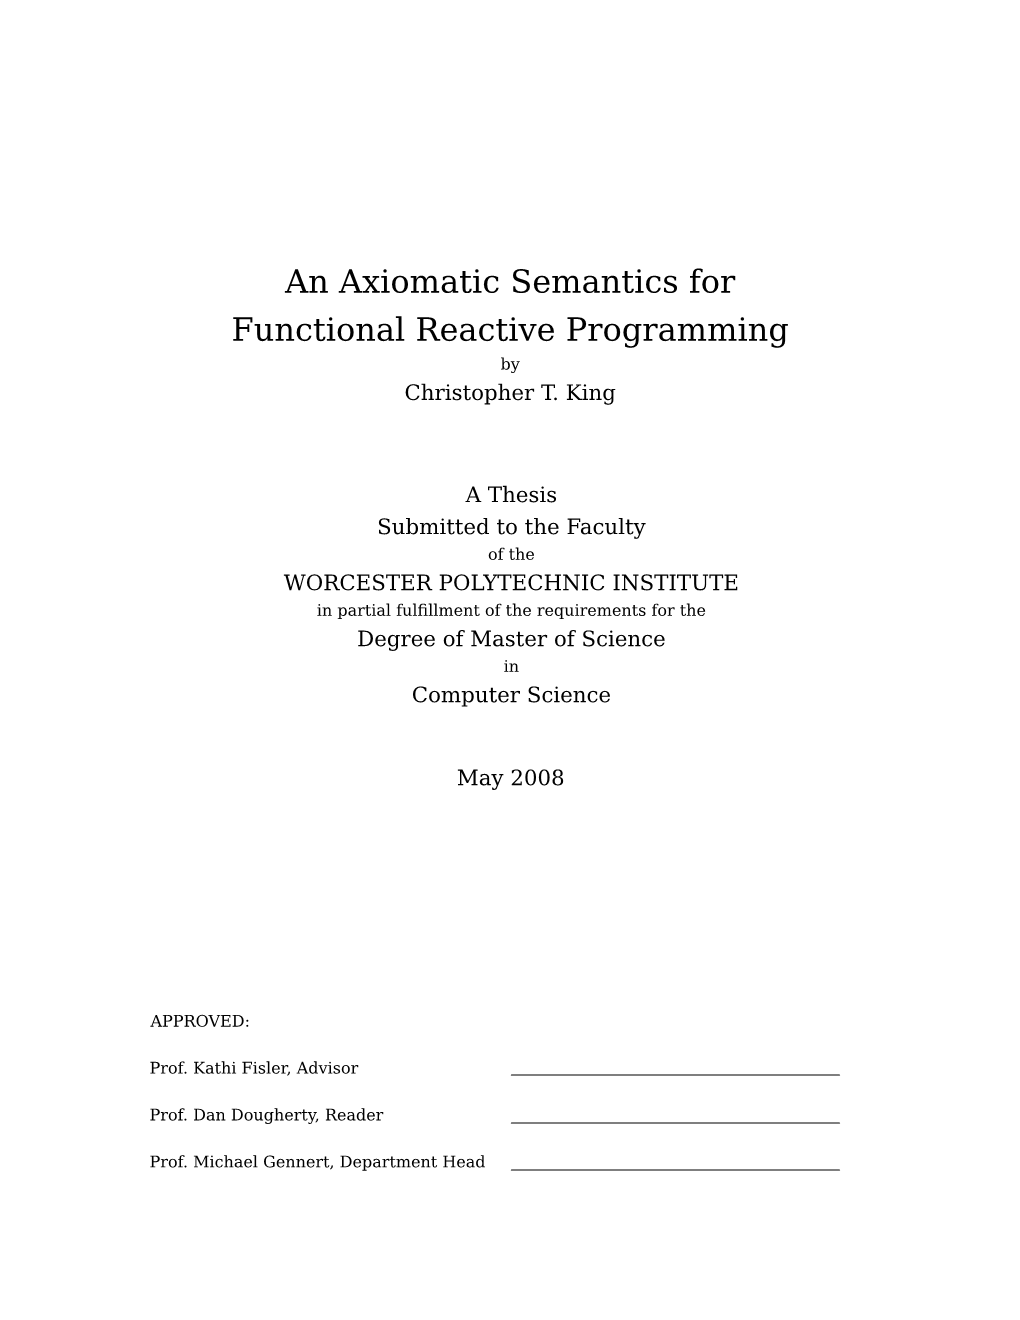 An Axiomatic Semantics for Functional Reactive Programming